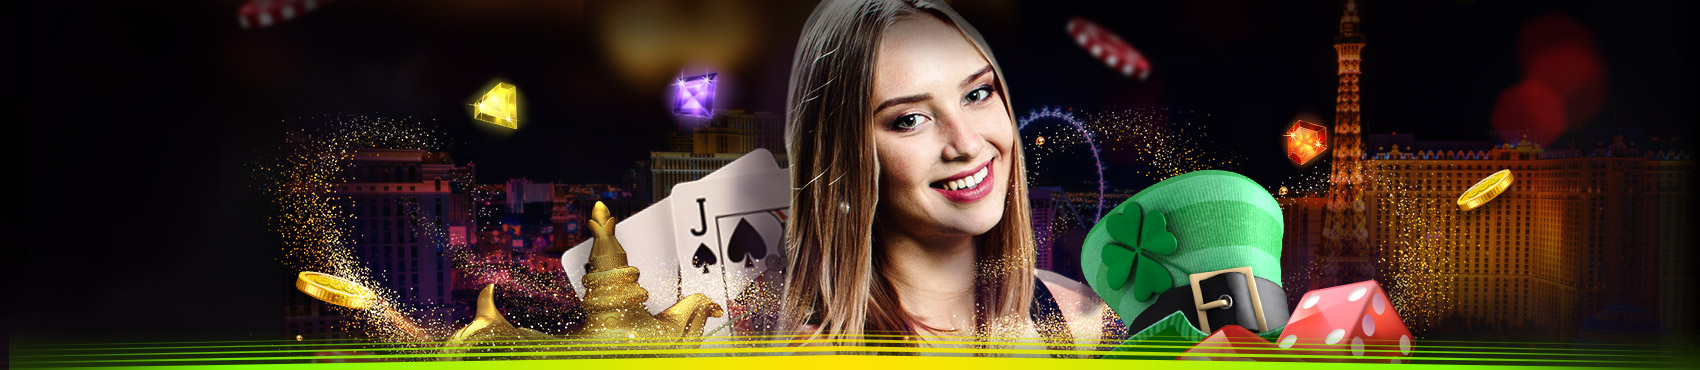 bookmaker 888sport online casino free welcome bonus offer